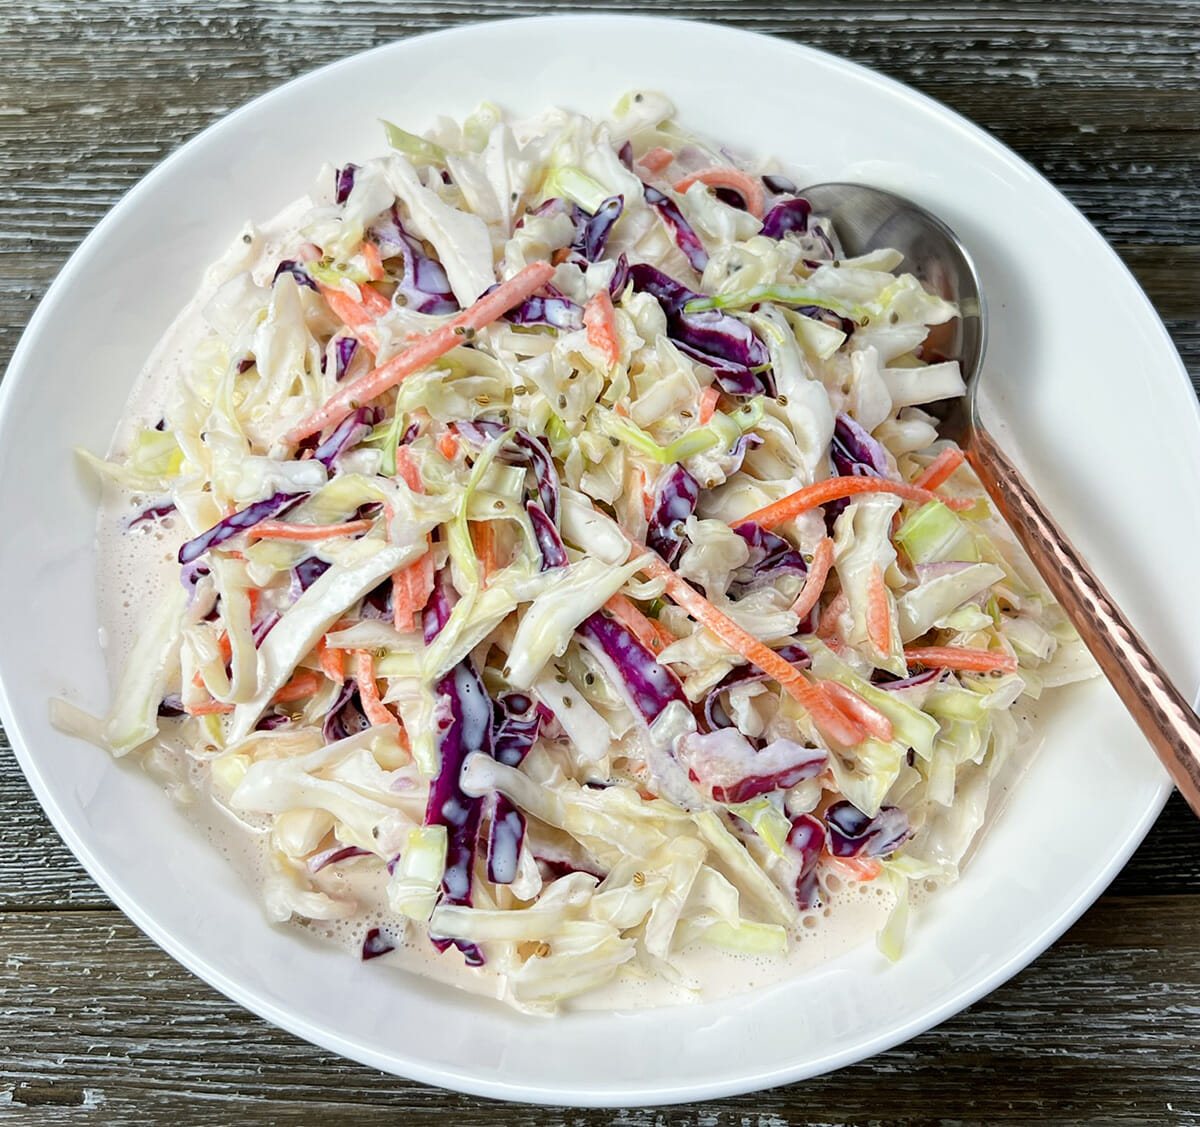 Recipe for homemade coleslaw